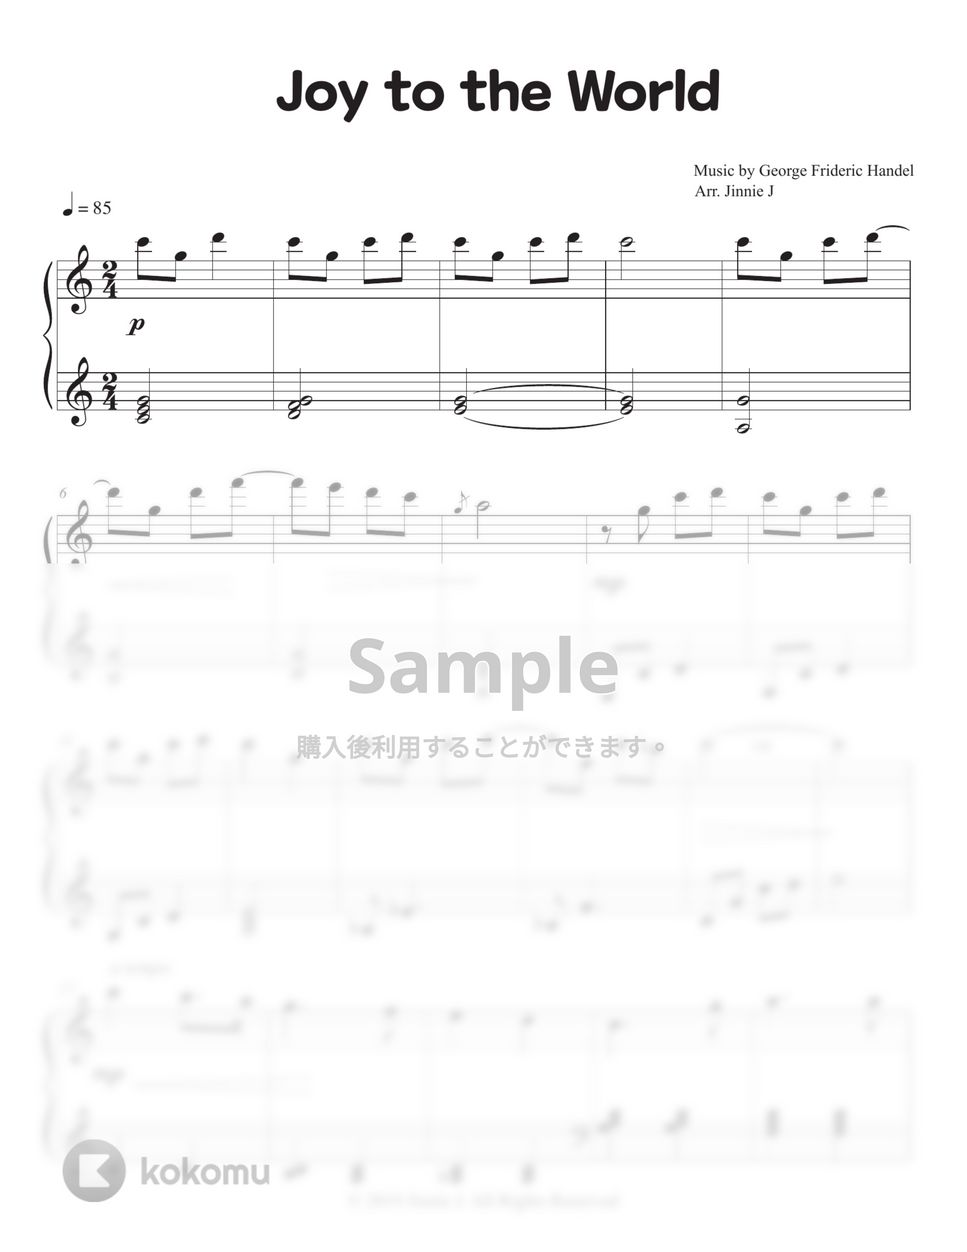 George Frideric Handel - Joy To The World (中級レベル) by Jinnie J